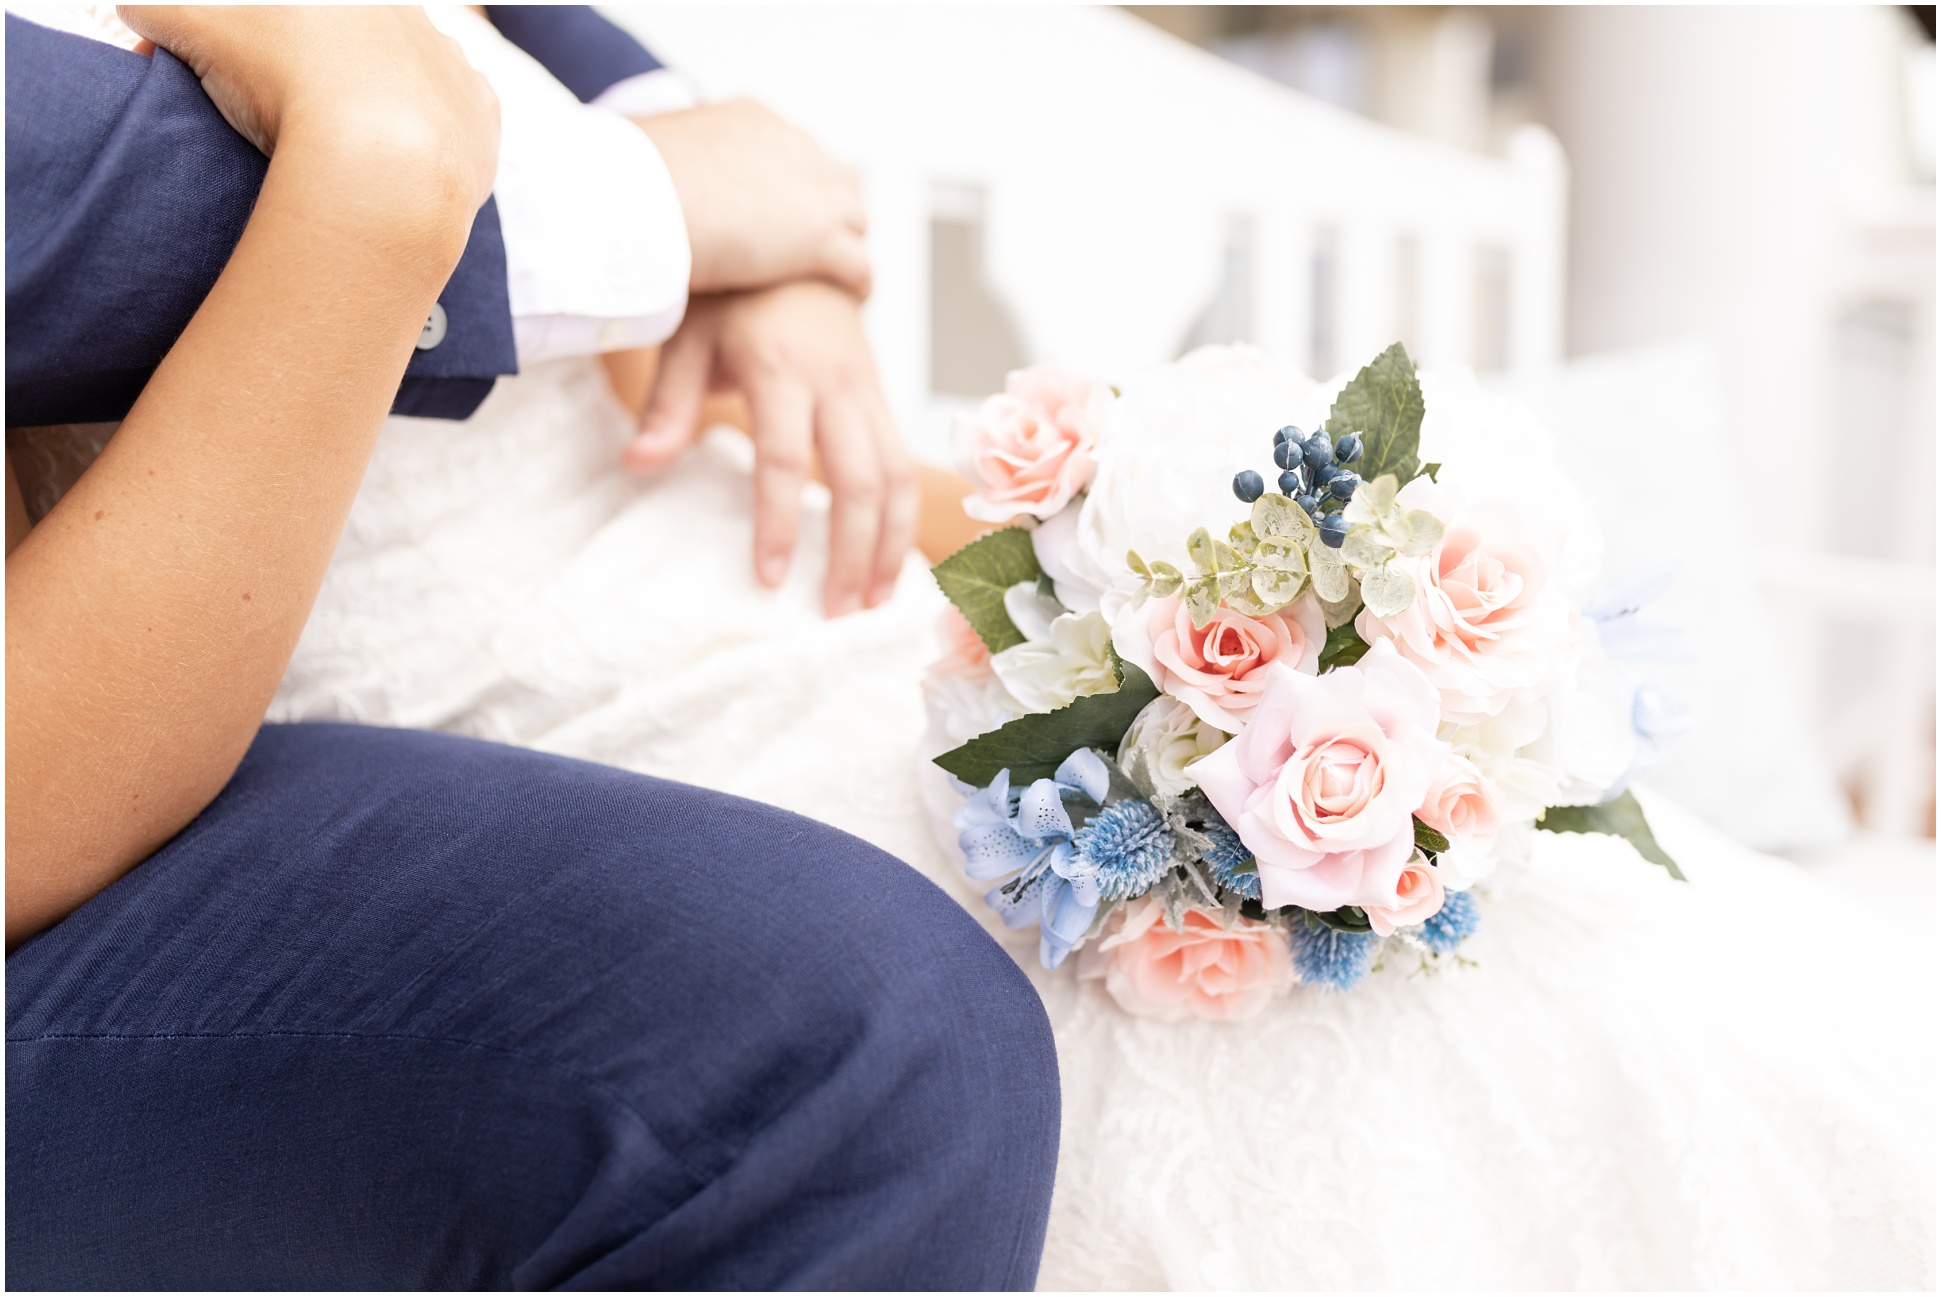 up close shot of bouquet on the bride's lap